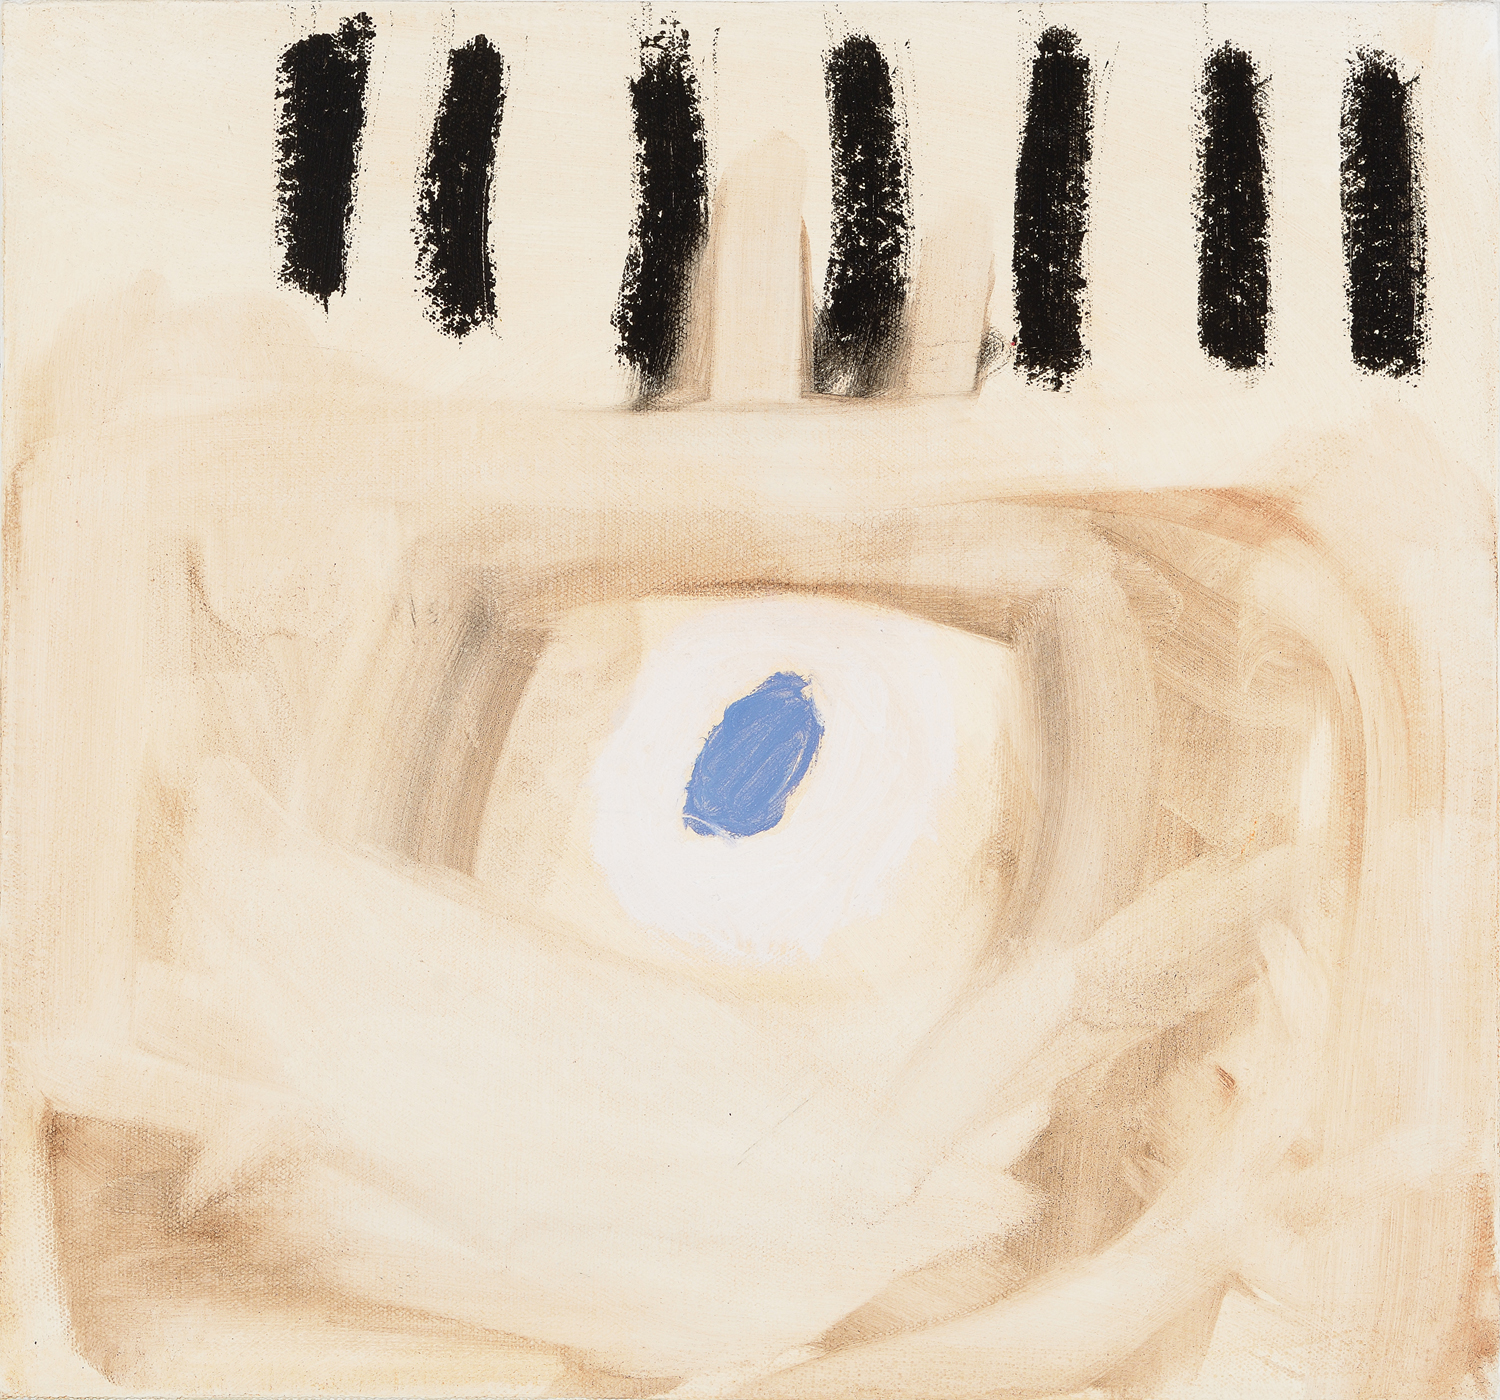  M's Eye, 2015. 14" x 15", oil on canvas.  